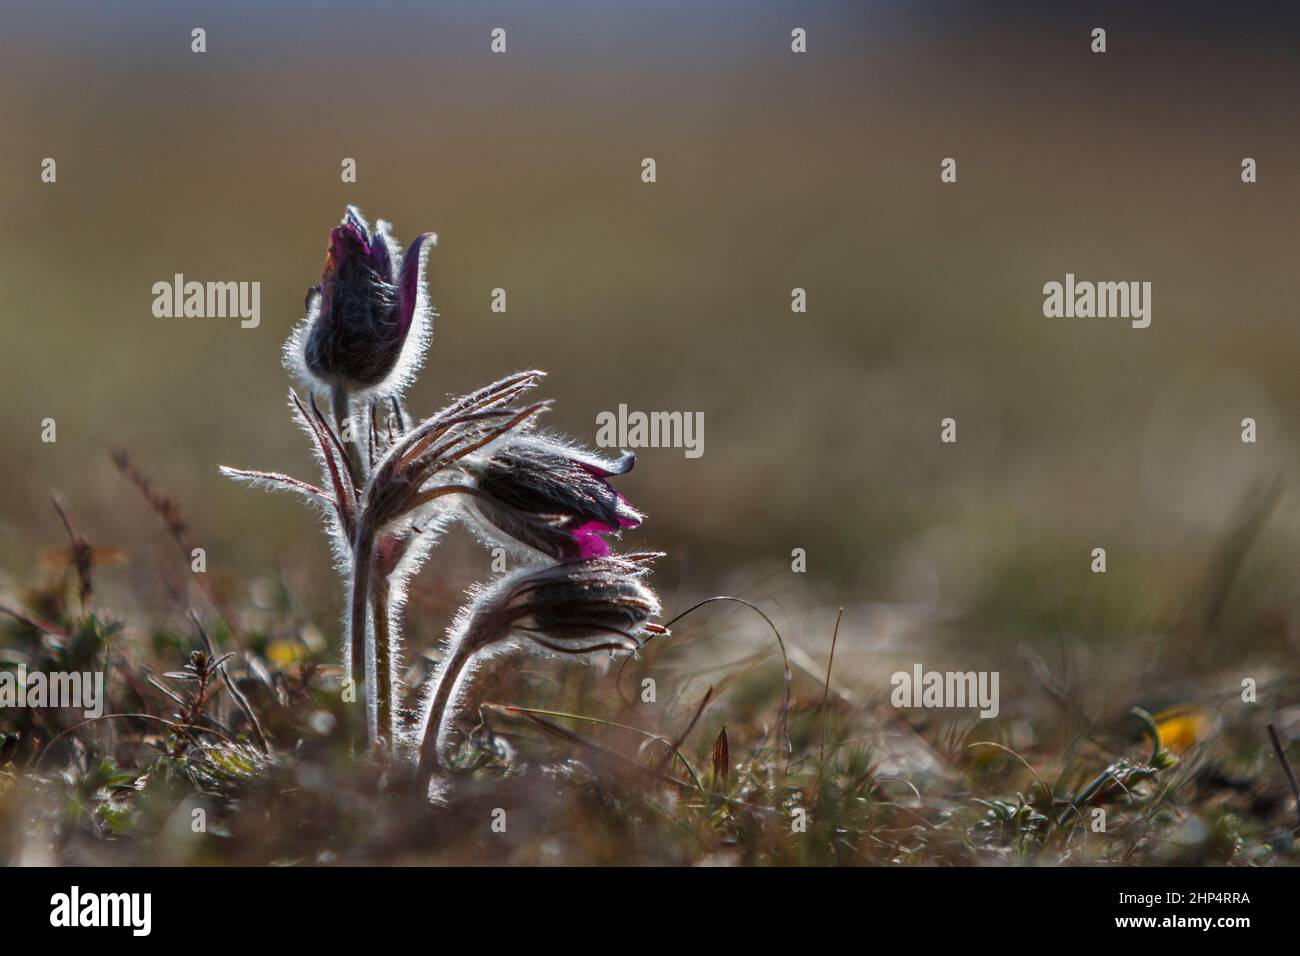 Pulsatilla nigra in early spring meadow, blurred background. Pasqueflower. Transylvania. Romania Stock Photo